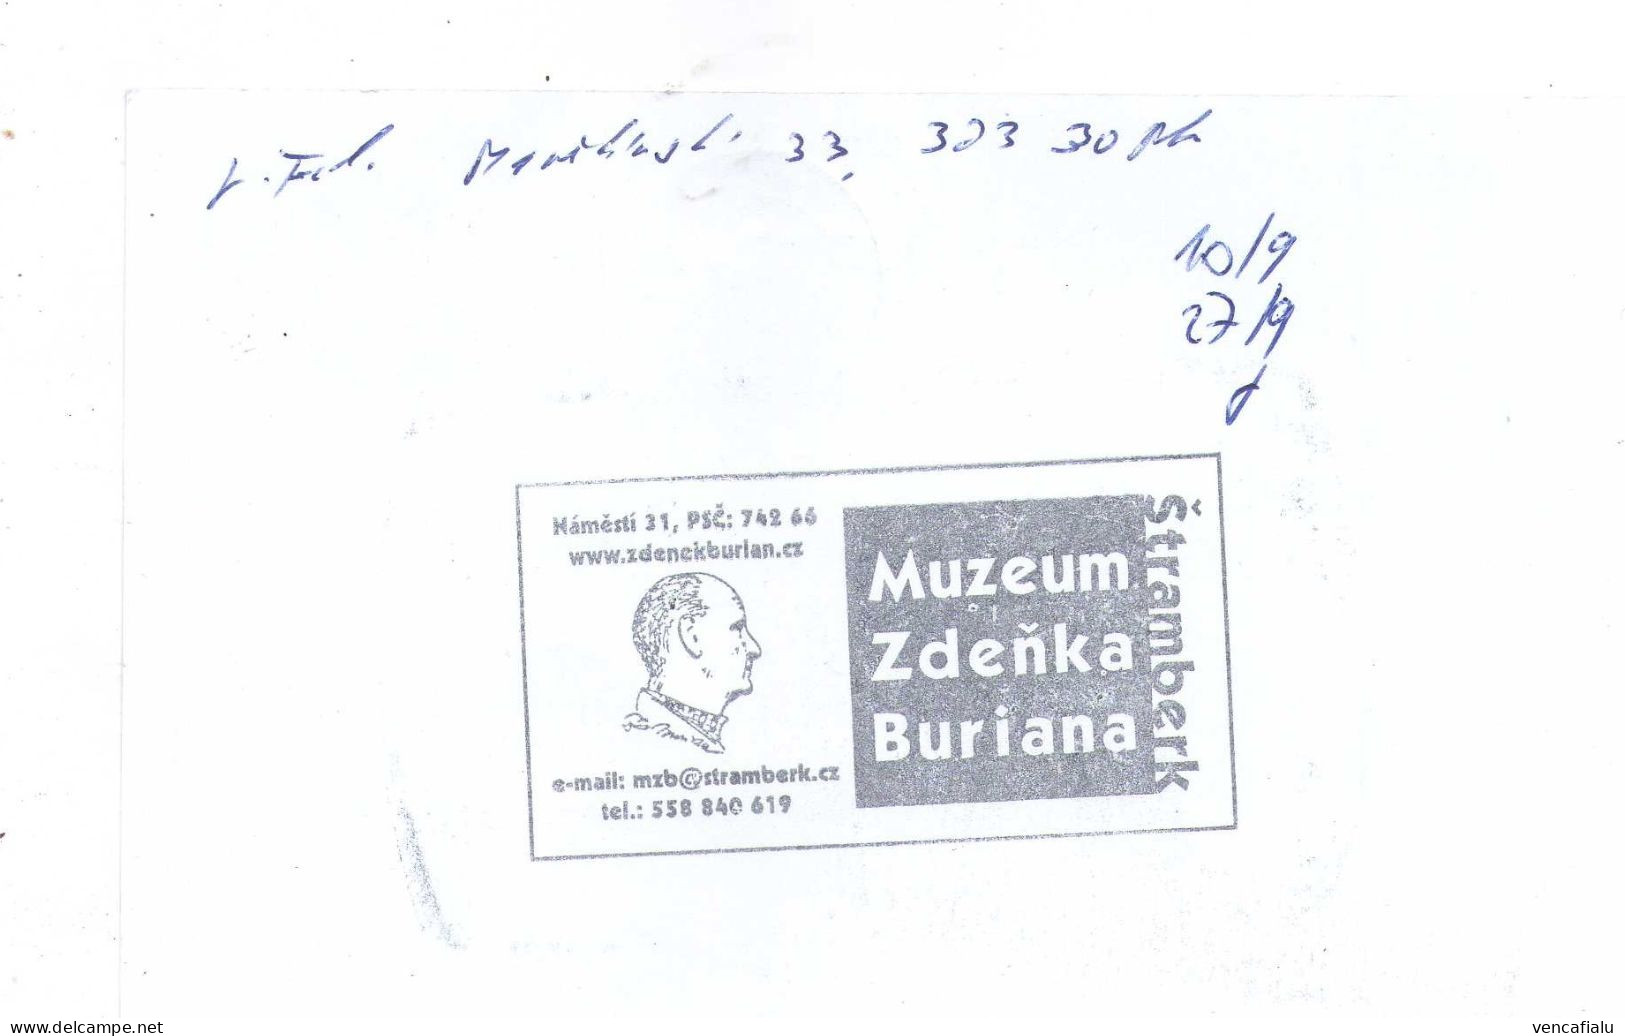 Czech Republic 2021 - Painting By Zdenek Burian,special Postal Stationery, Postage Used, With Caschet Od Muzeum - Indios Americanas